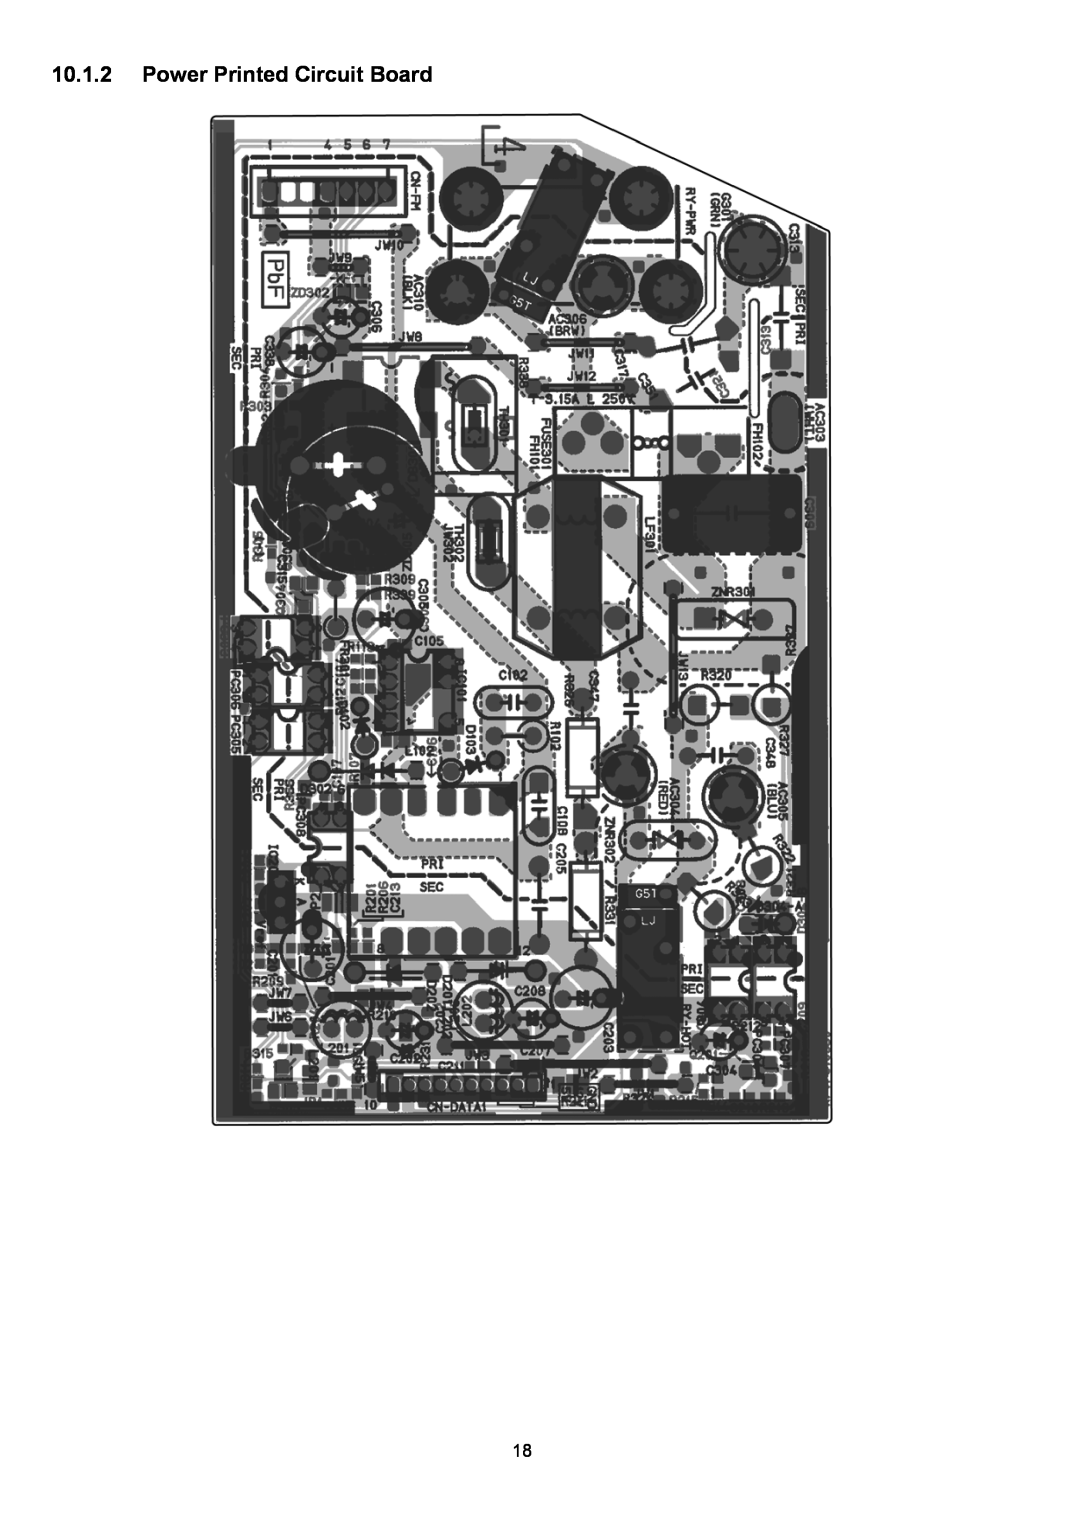 Panasonic CS-C18KKS, CU-C18KKS, CU-C24KKS, CS-C24KKS dimensions 10.1.2Power Printed Circuit Board 